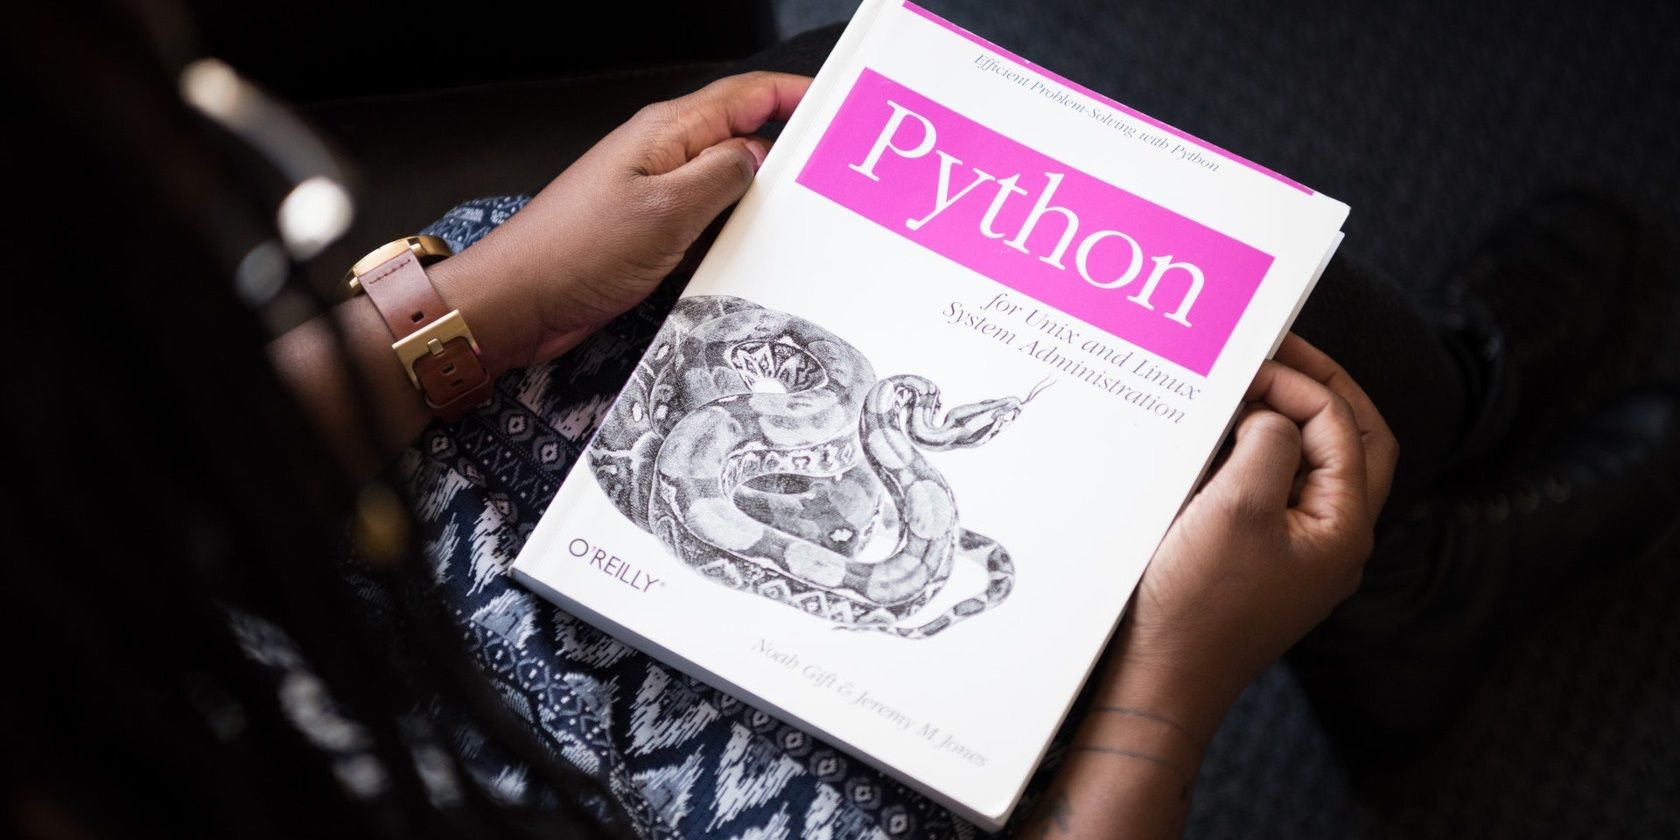 Hand holding a Python book